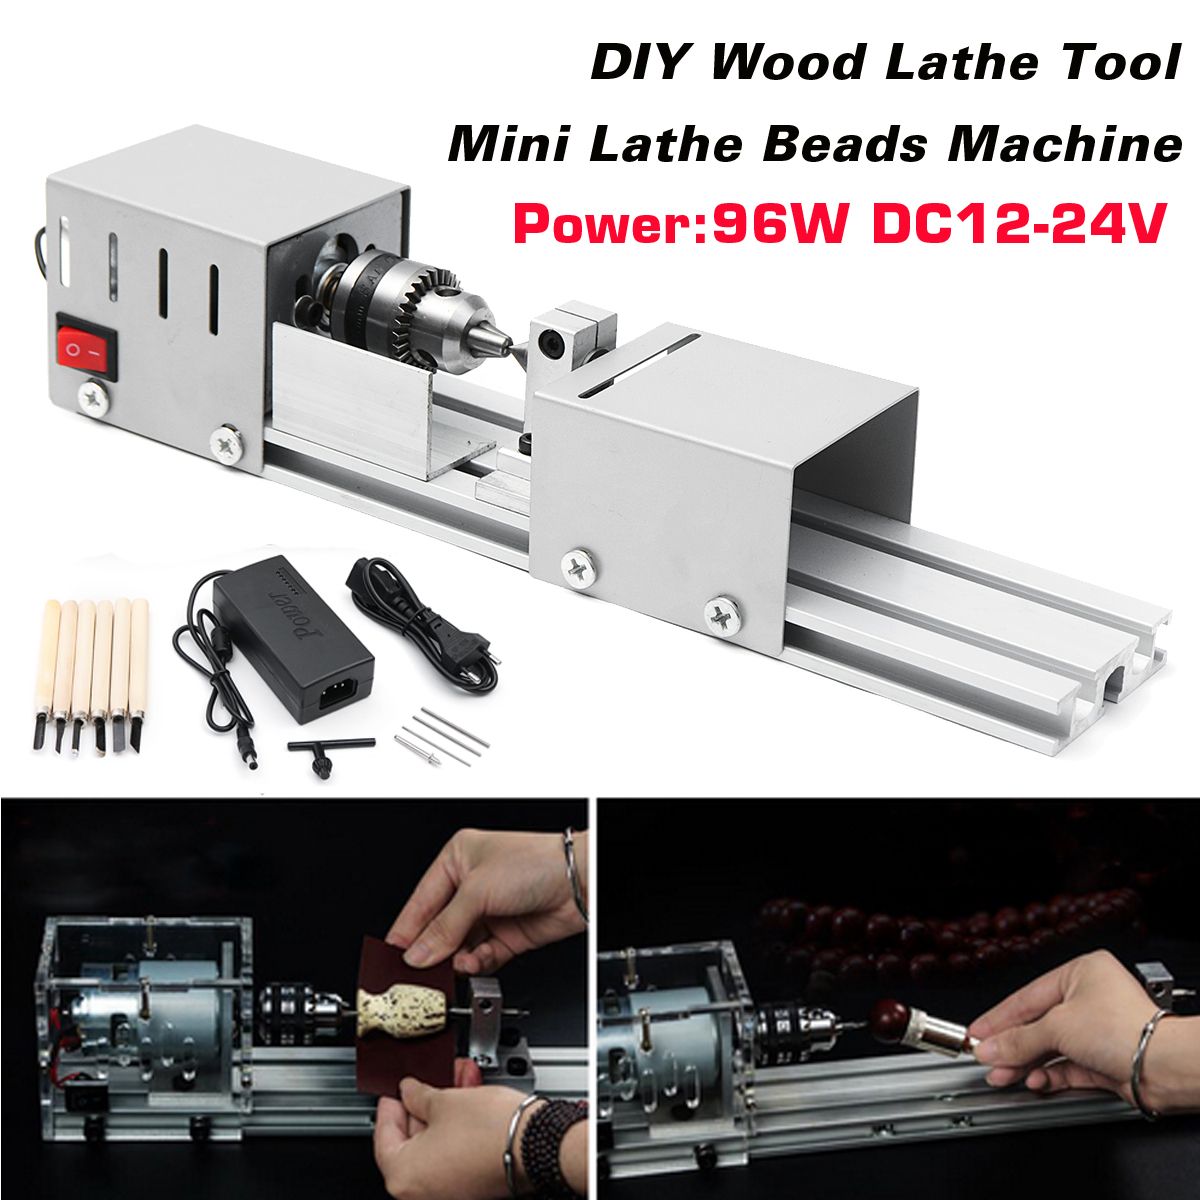 96W--DC12-24V-Mini-Wood-Lathe-Beads-Saw-Machine-Set-Woodworking-DIY-Beads-Polishing-Cutting-Drill-1374756